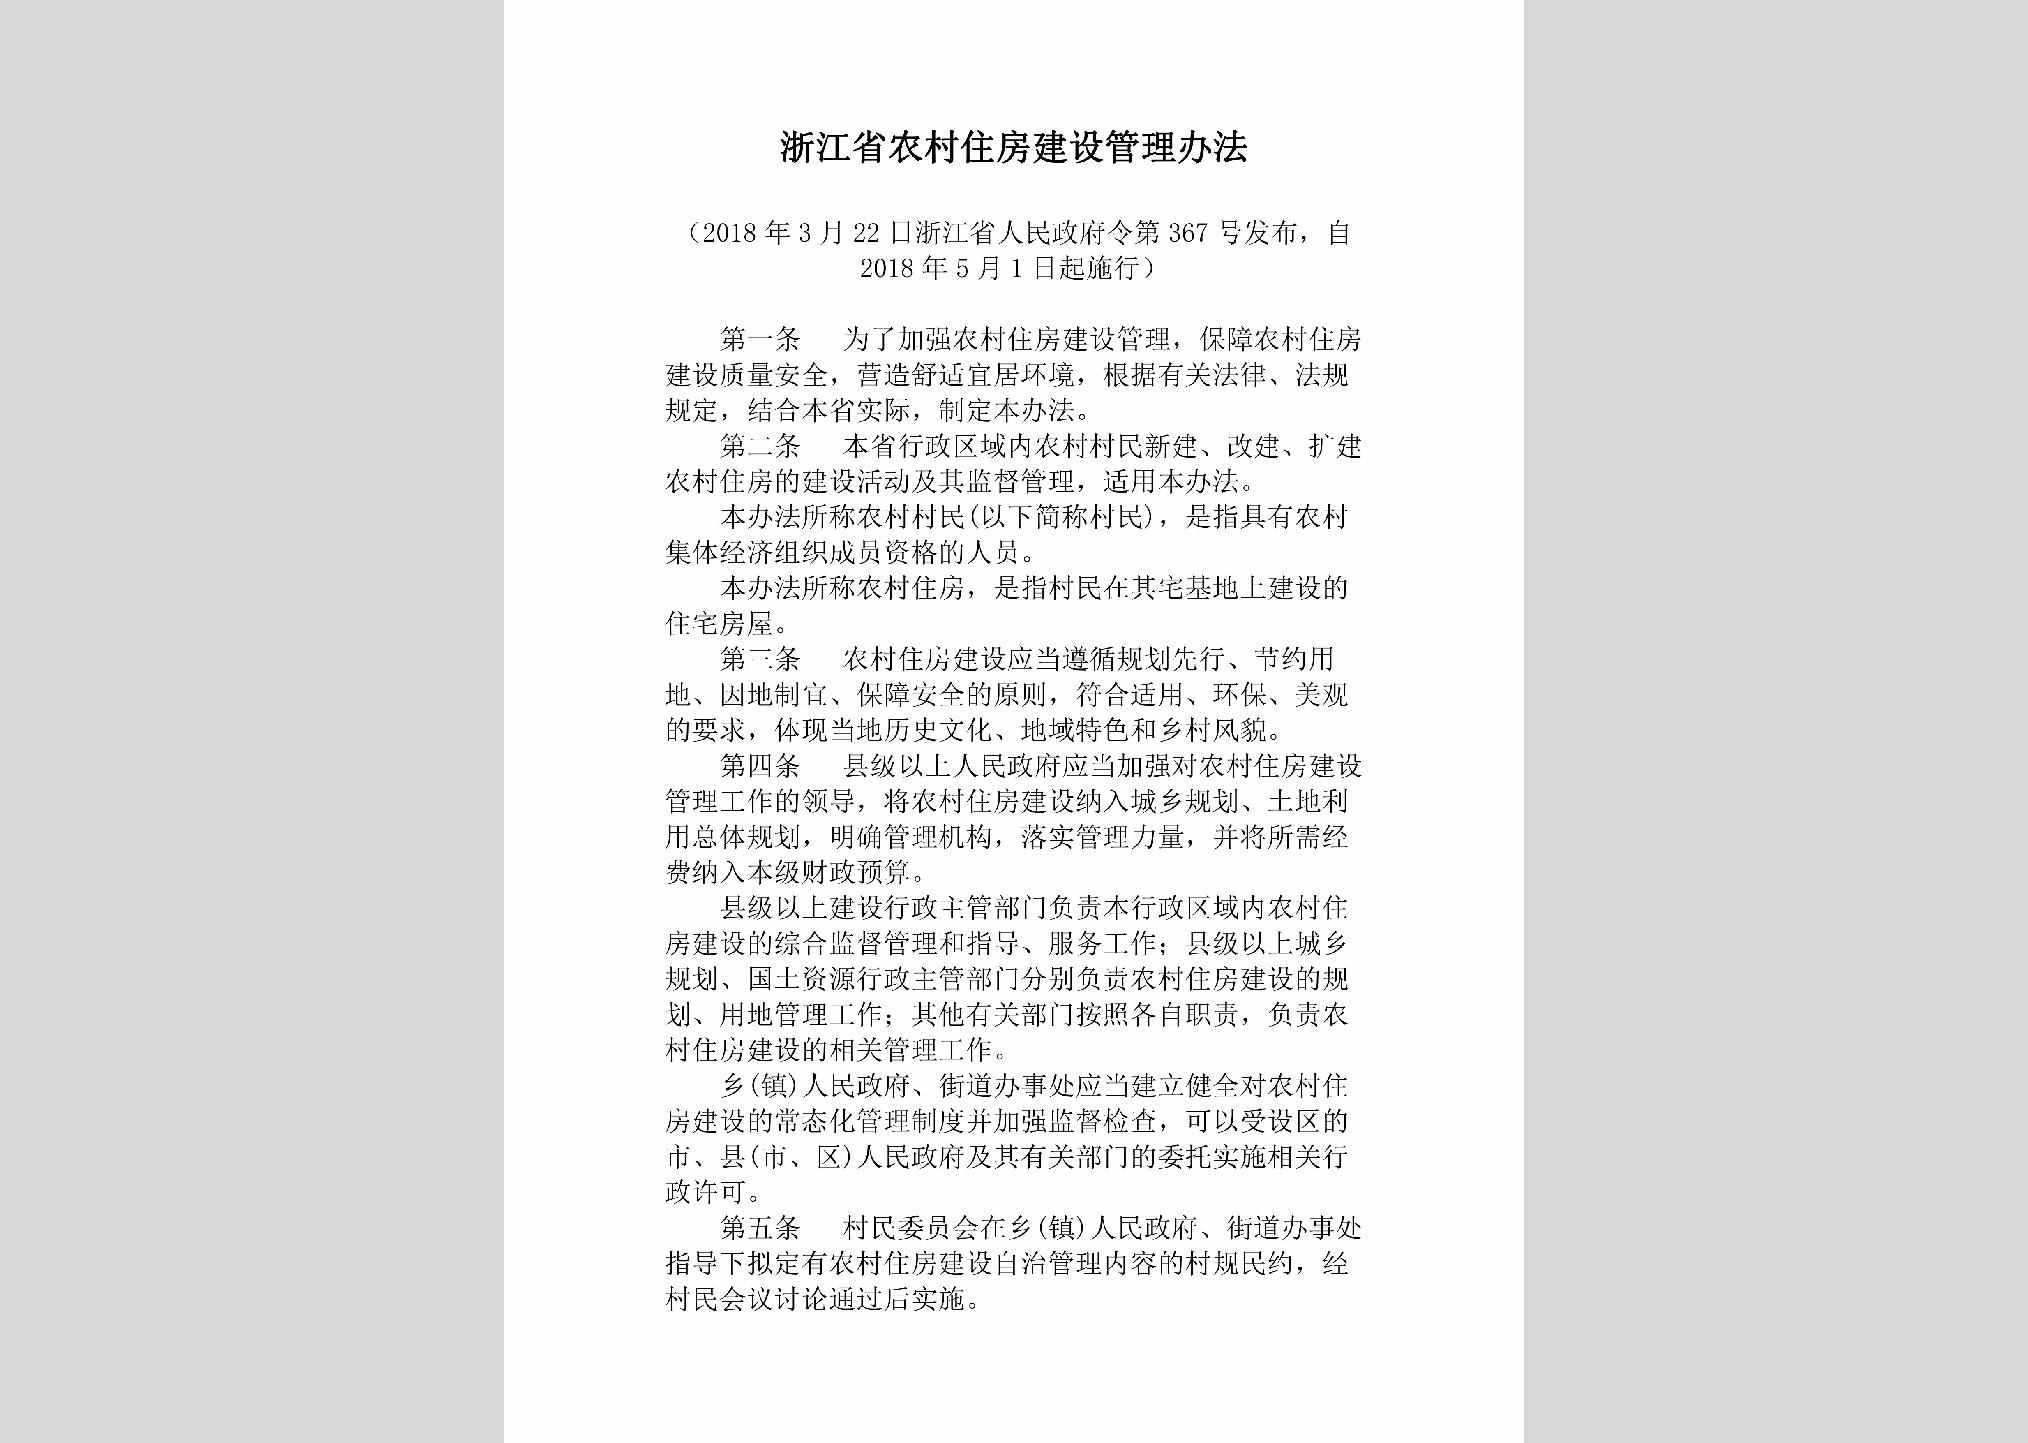 ZJ-NCZFJSGL-2018：浙江省农村住房建设管理办法